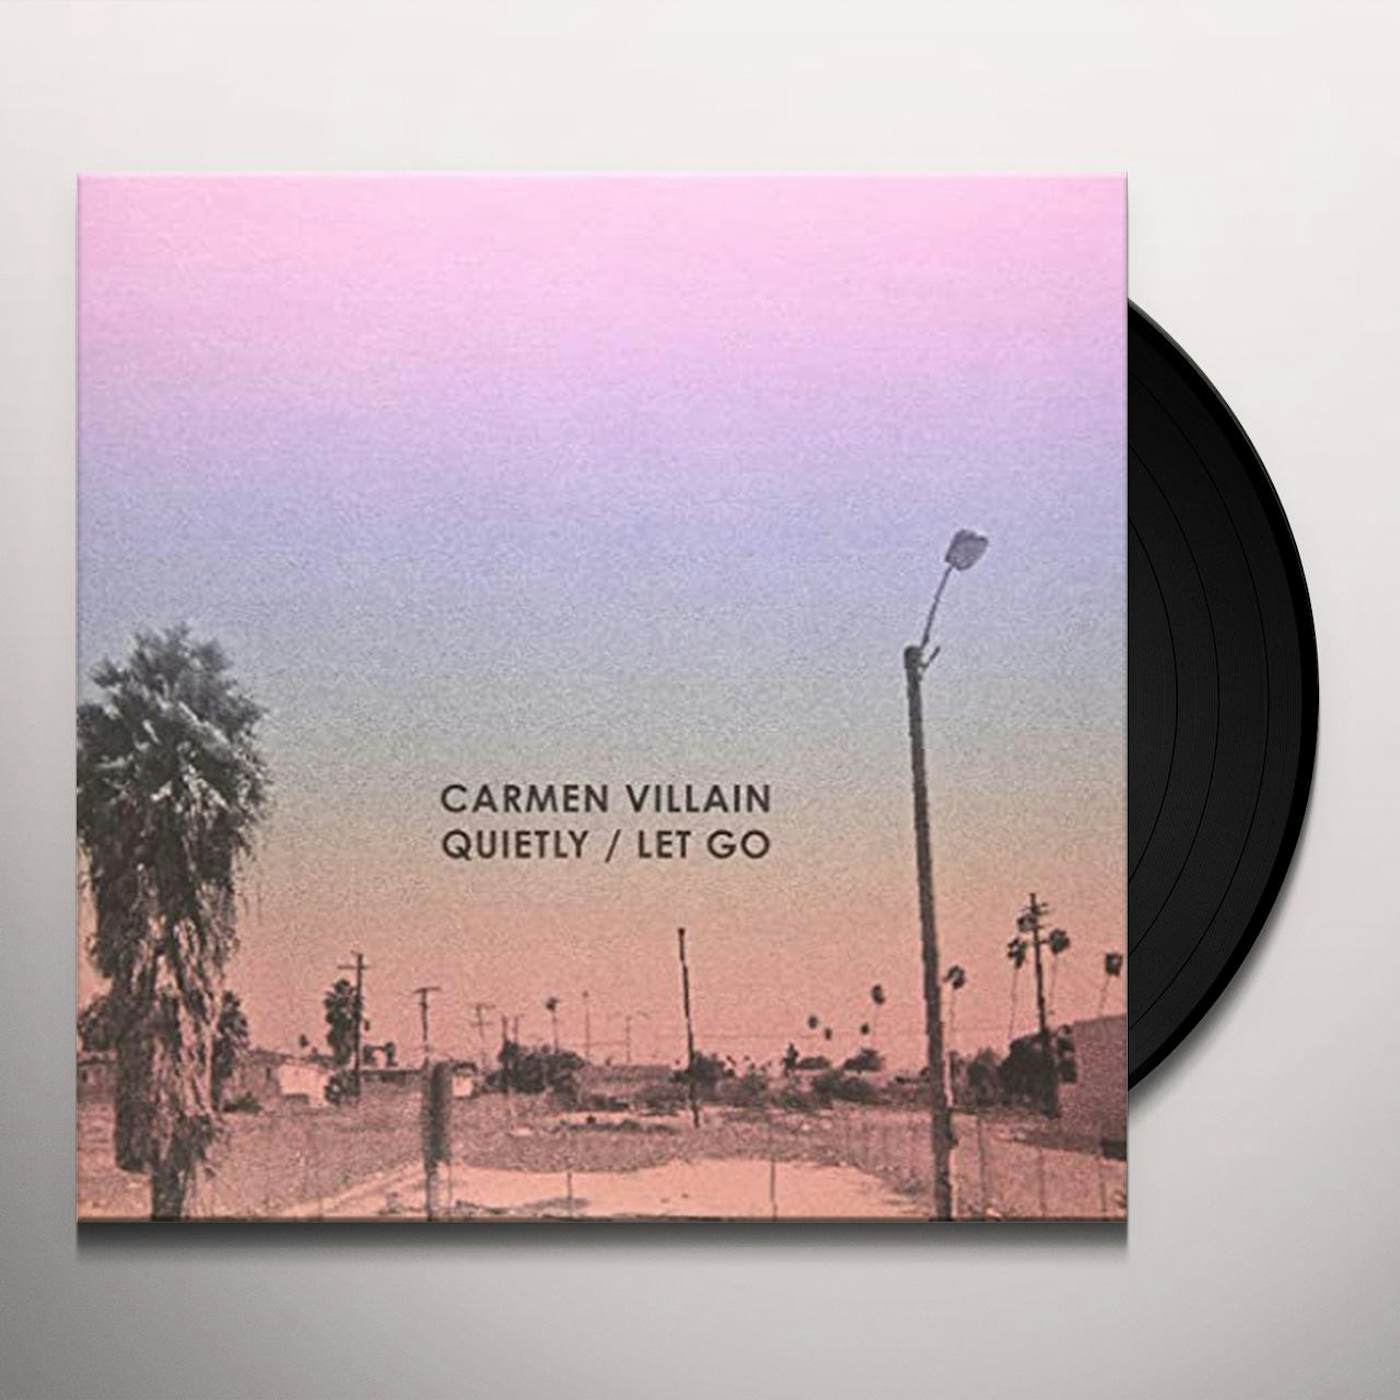 Carmen Villain Quietly/let go - 7 Vinyl Record